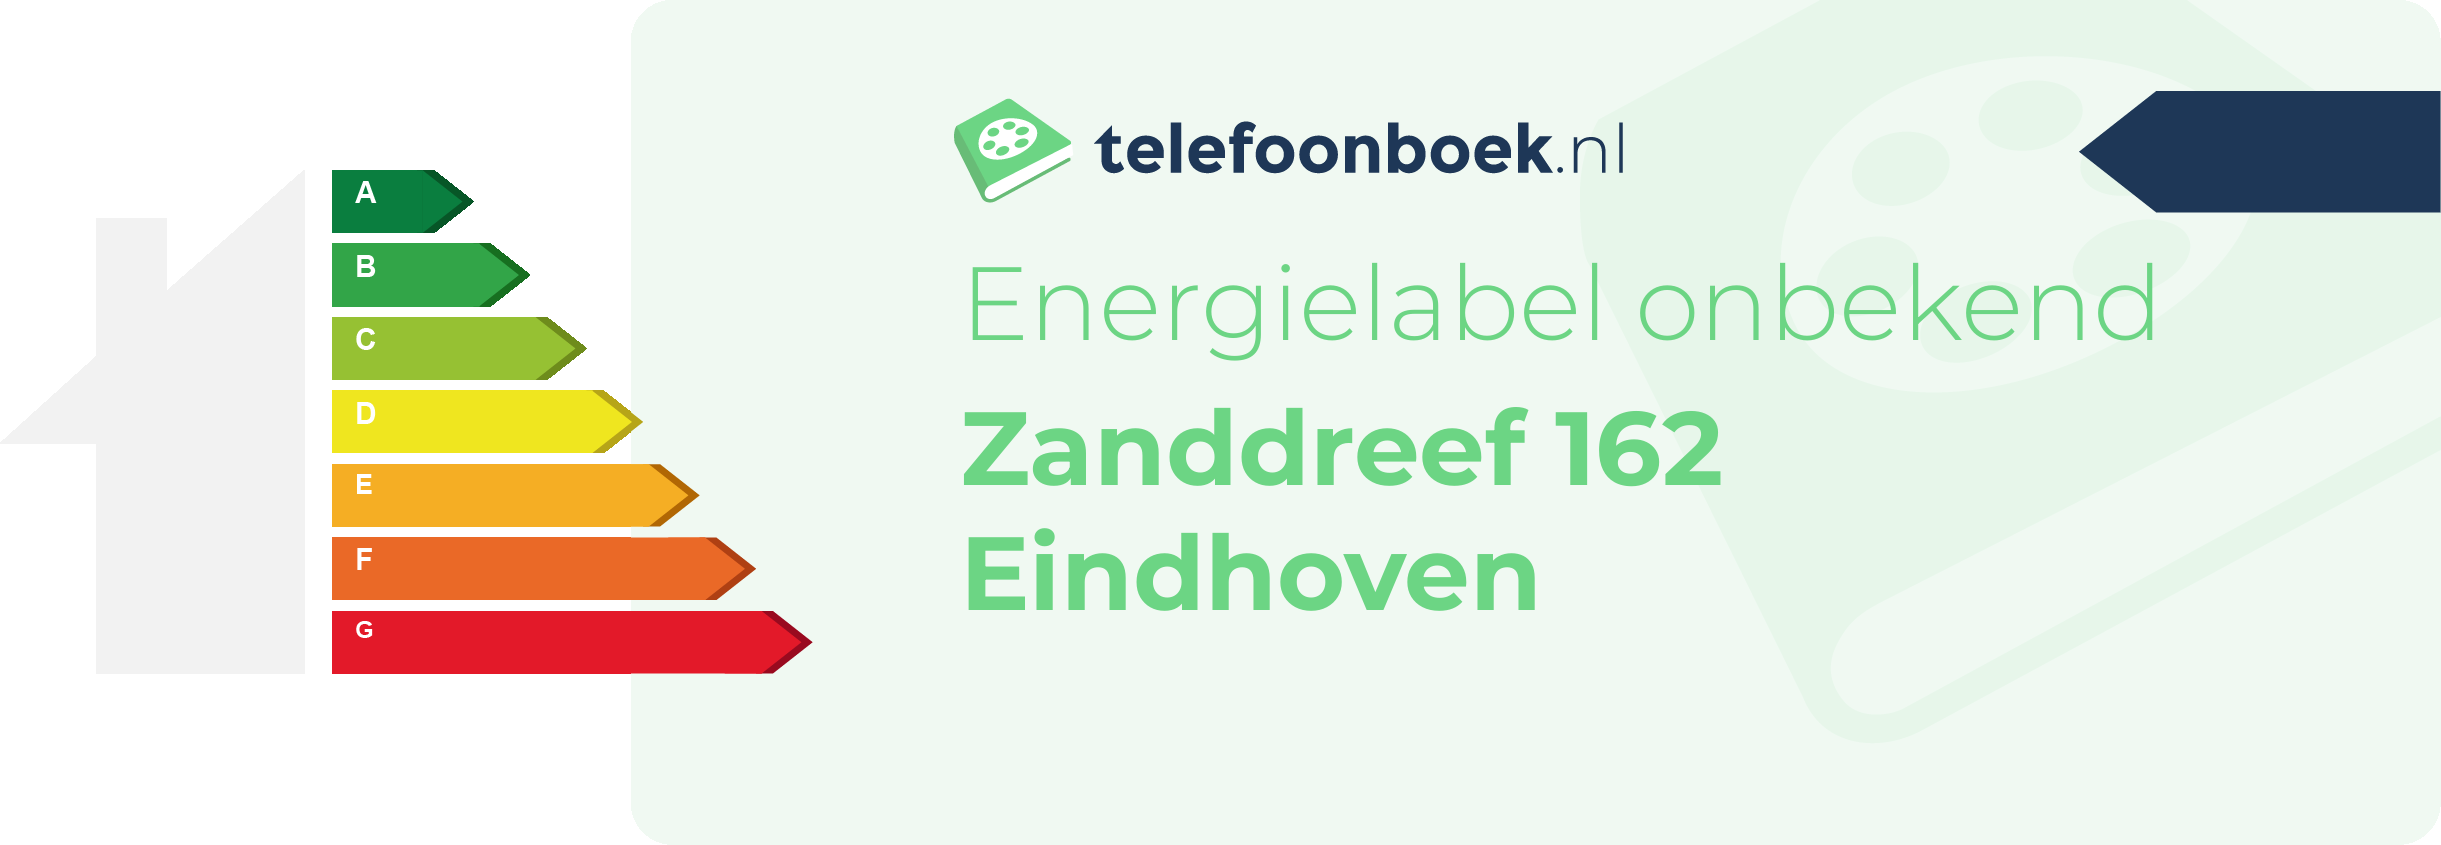 Energielabel Zanddreef 162 Eindhoven